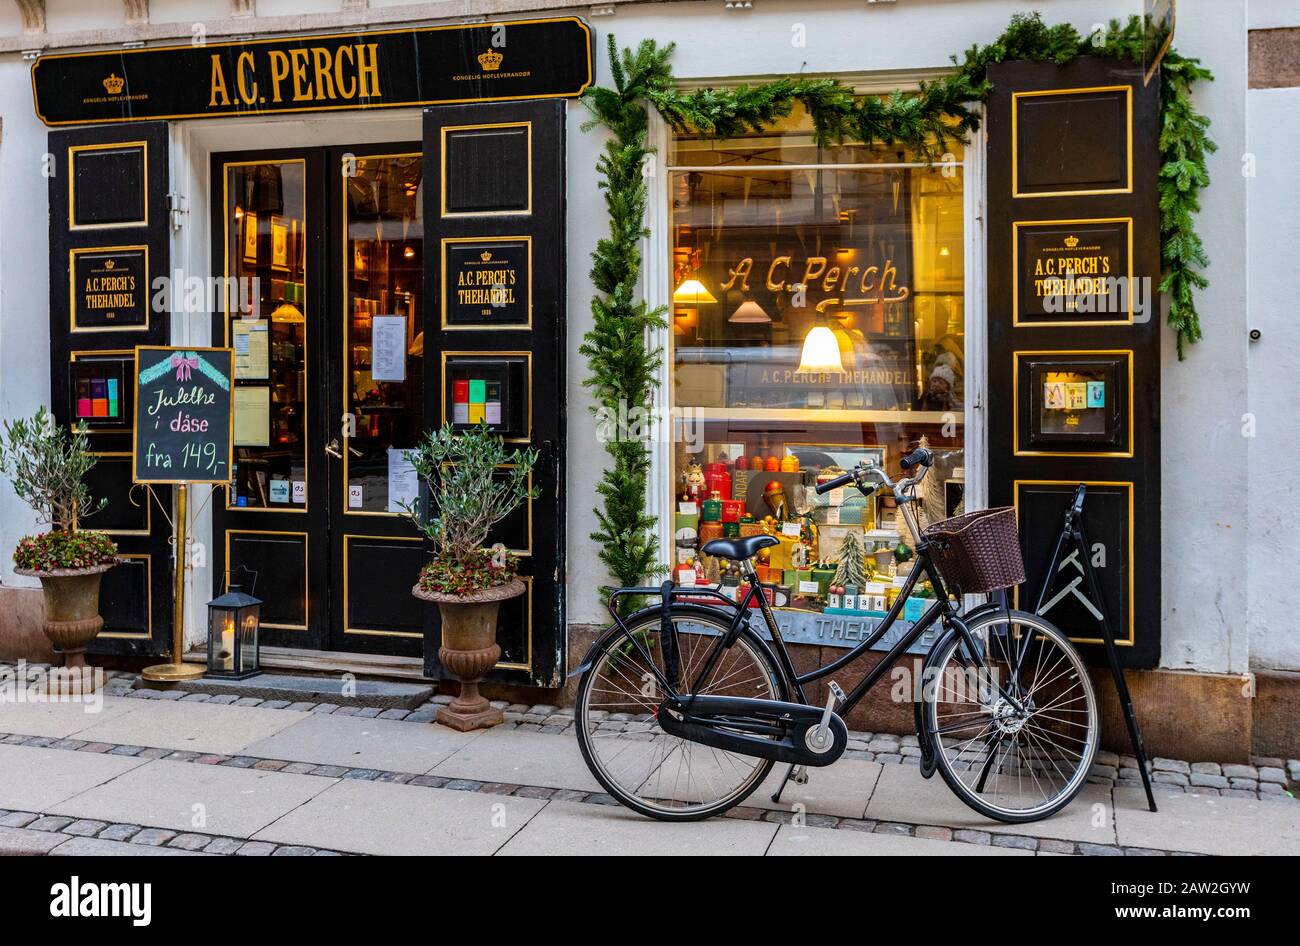 A C Perch Tea Shop, Copenhagen, Denmark Stock Photo - Alamy